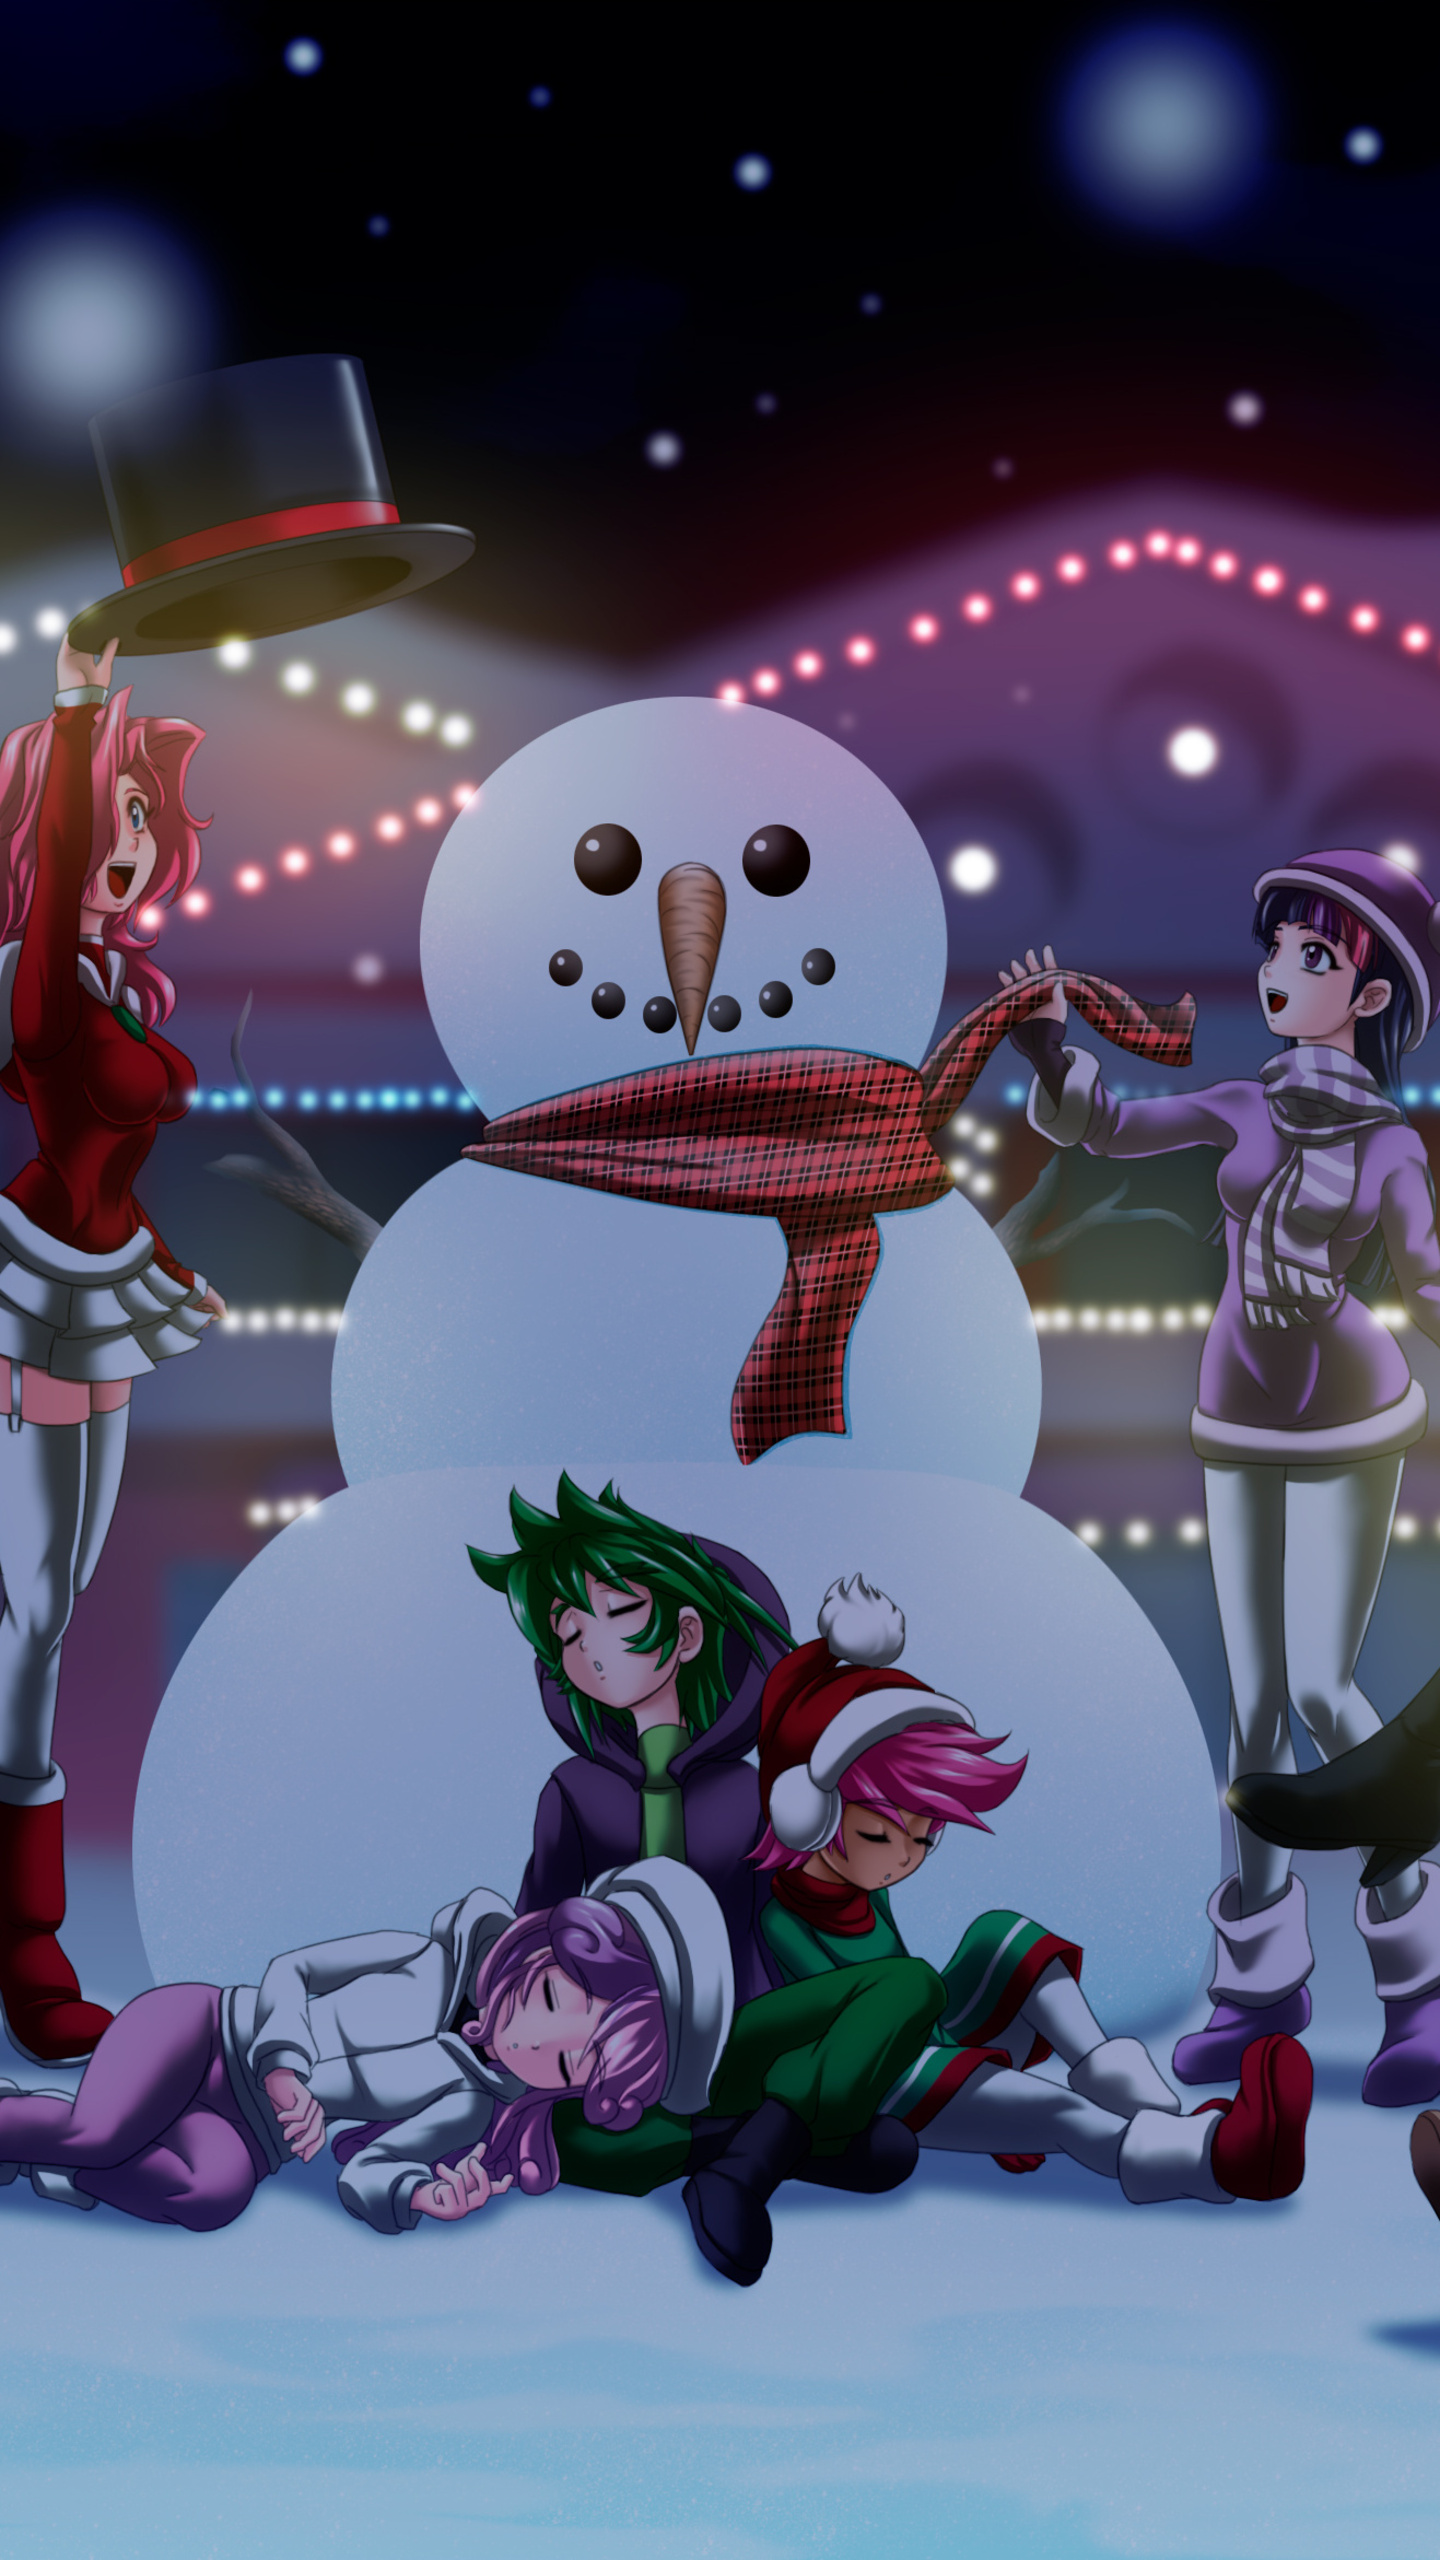 1440x2560 Anime Girls Celebrating Christmas 4k Samsung Galaxy S6